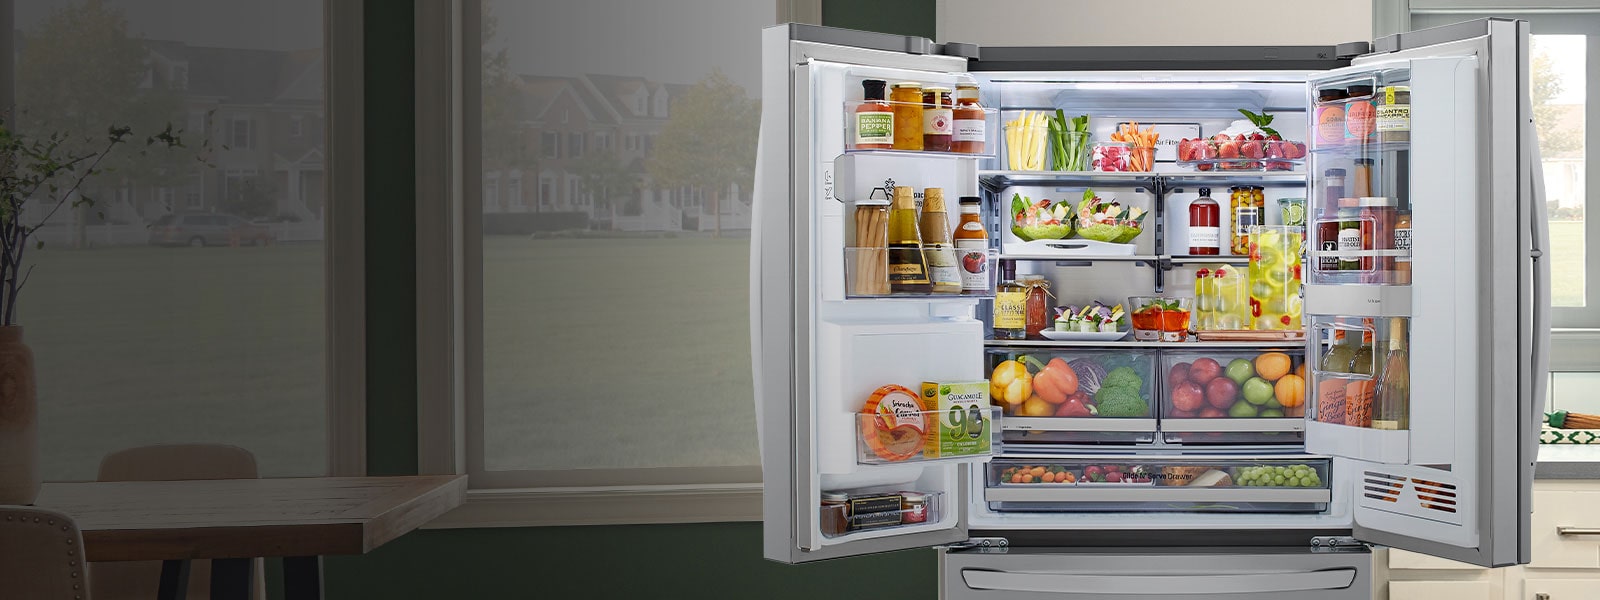 Open LG Refrigerator in a kitchen